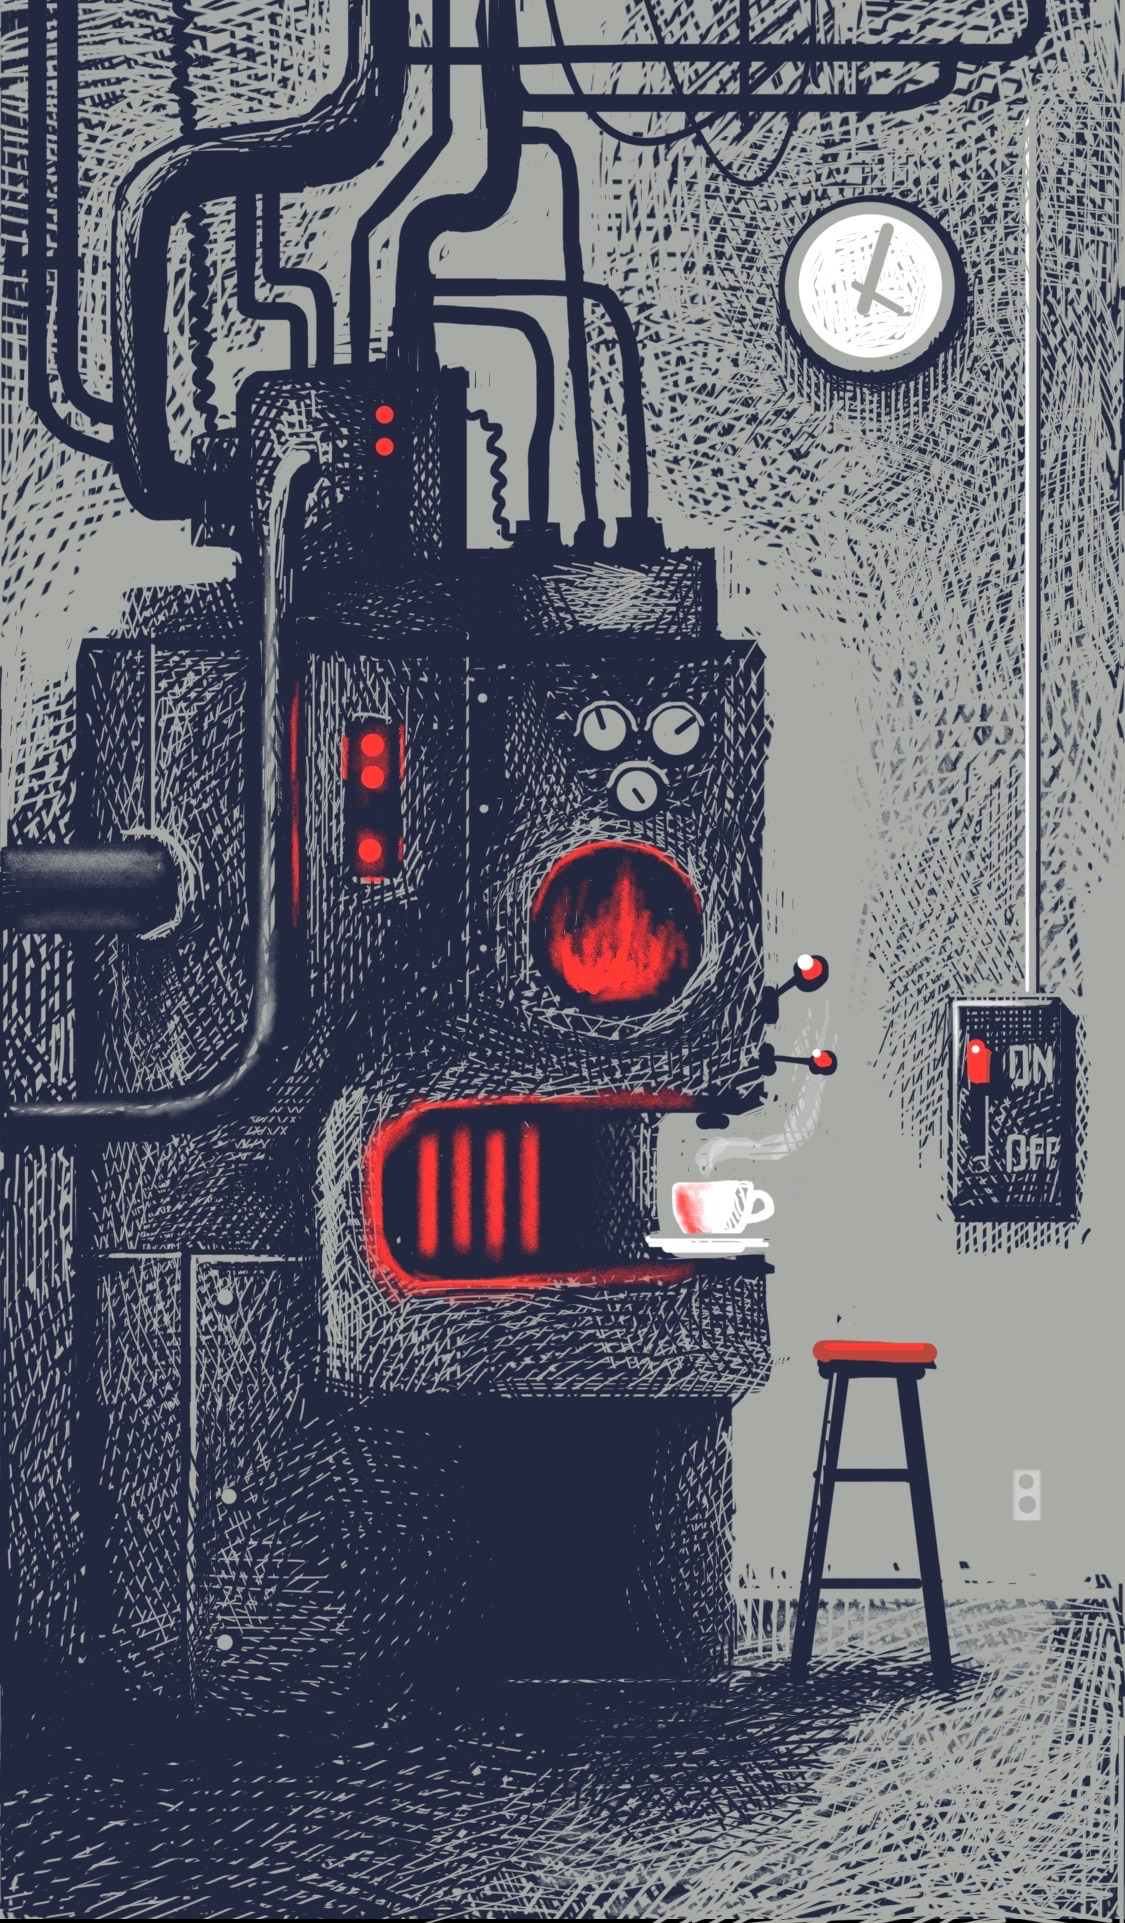 A giant furnace-like espresso machine dominates a tiny room, a cup of coffee balanced on one of its edges